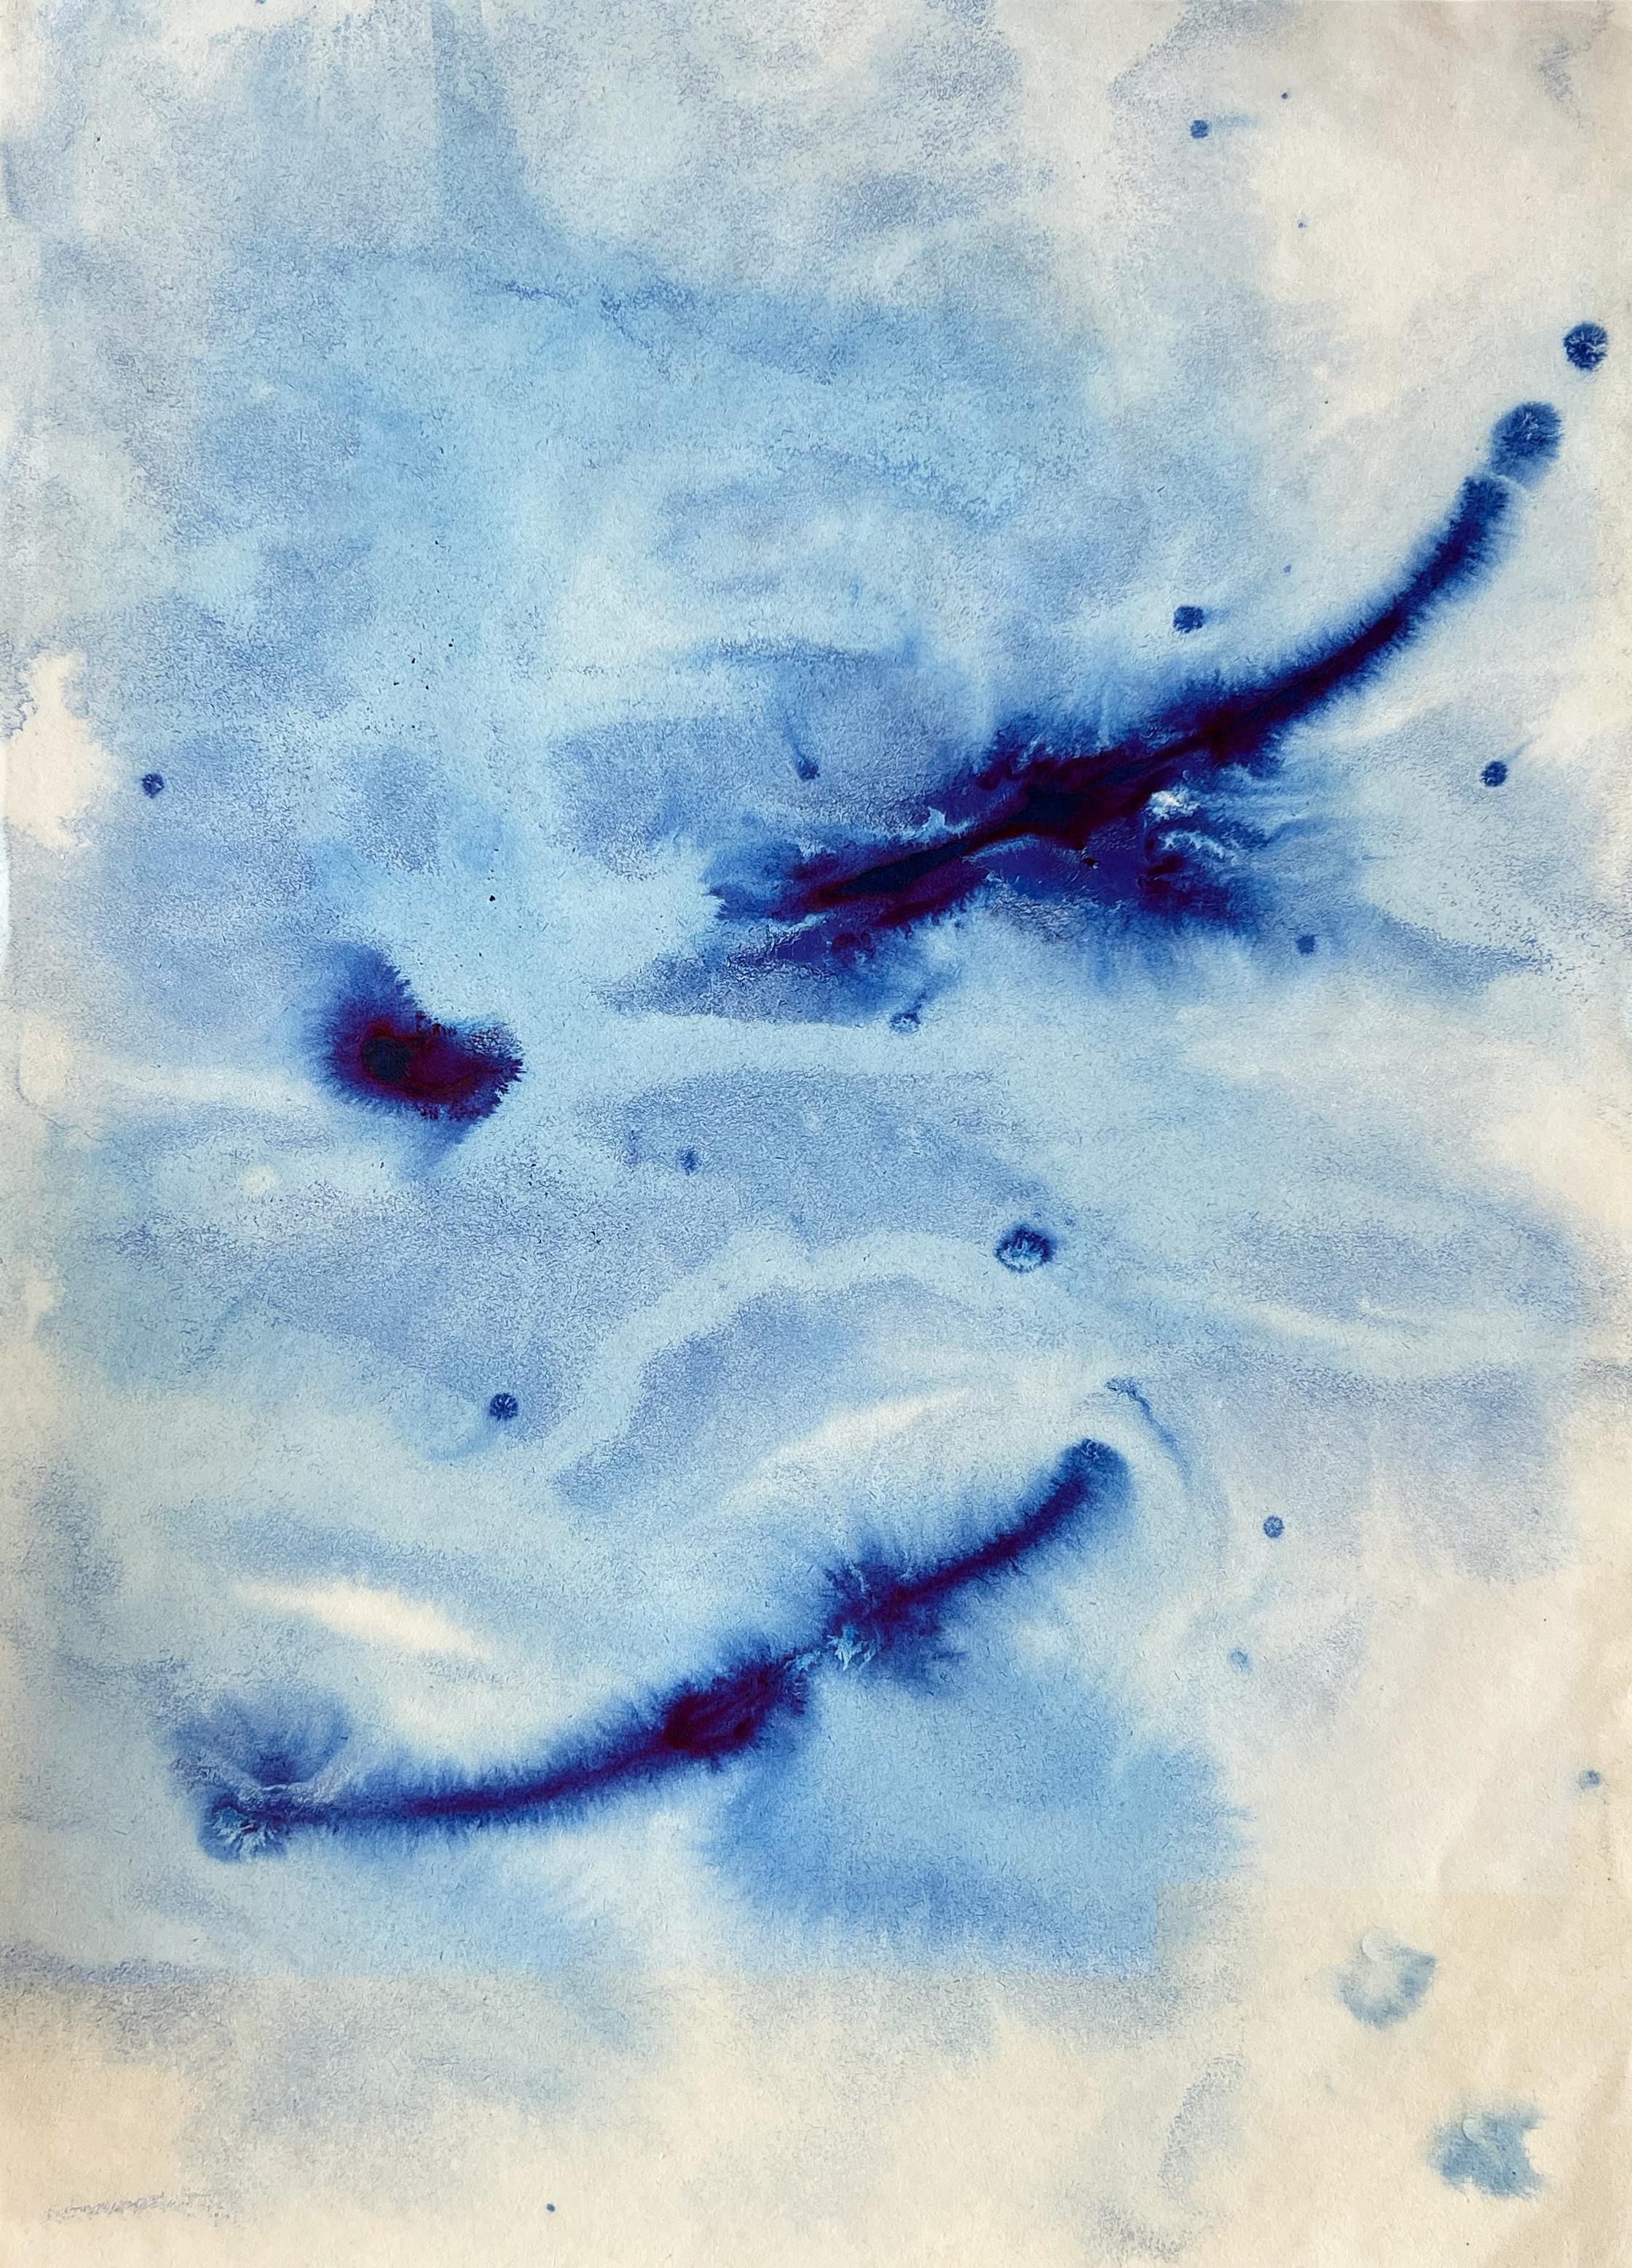 Original ink on Paper, 30 x 42 cm, Contemporary Painting, Minimalist Blue Sea